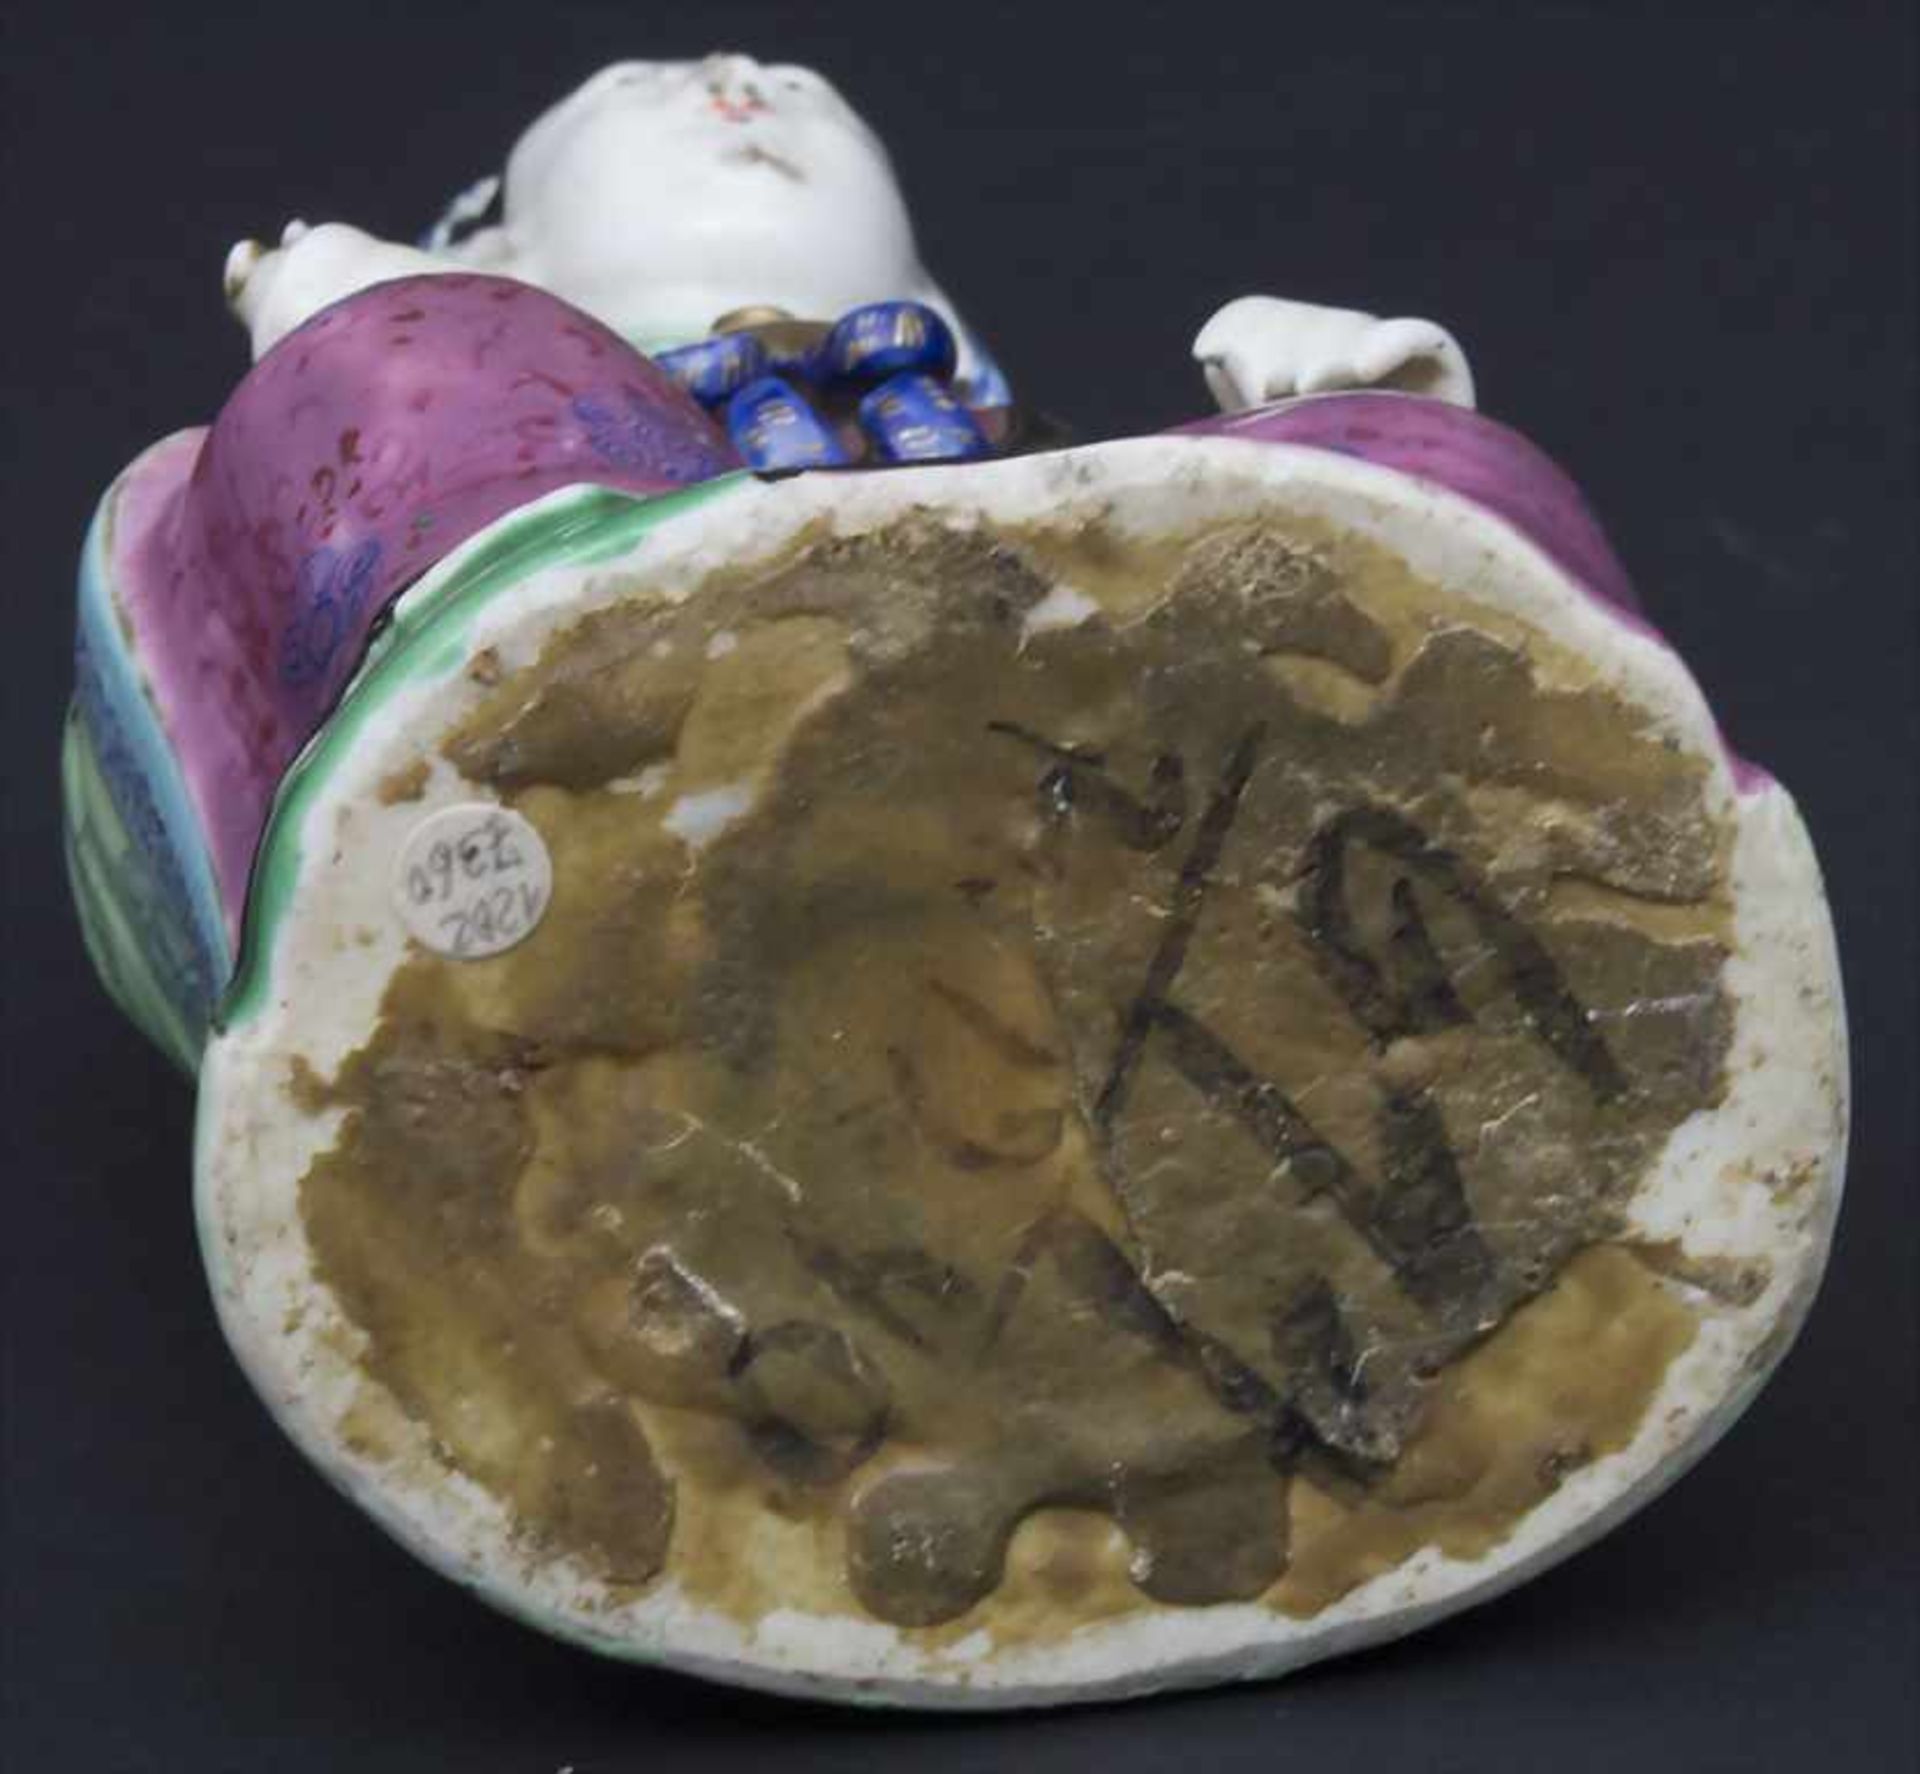 Guanjin bzw. Räuchergefäß, China, Qing-Dyastie, 18.Jh.Material: Porzellan, polychrom bemalt, - Image 5 of 6